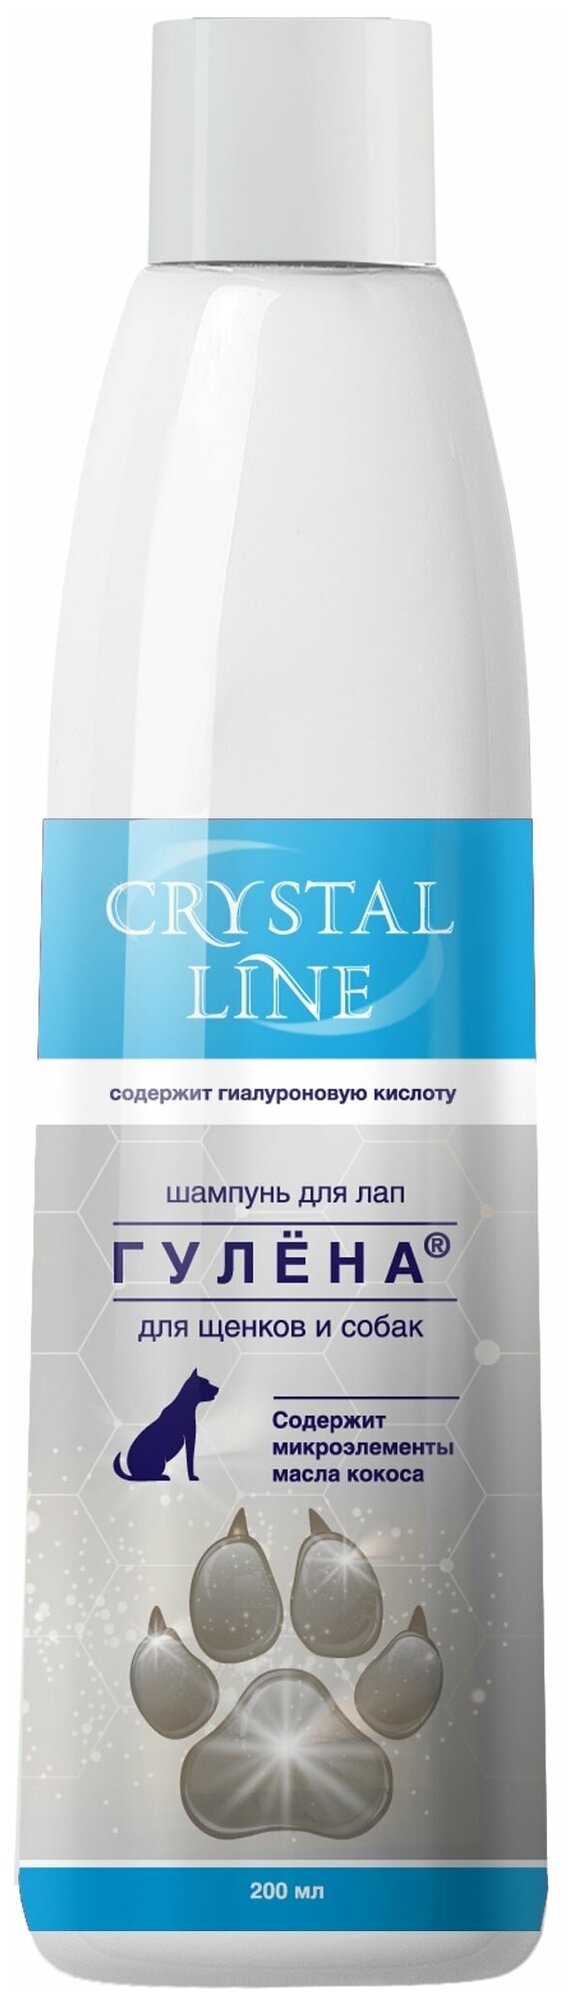 Apicenna Crystal Line Гулёна Шампунь для лап 200мл